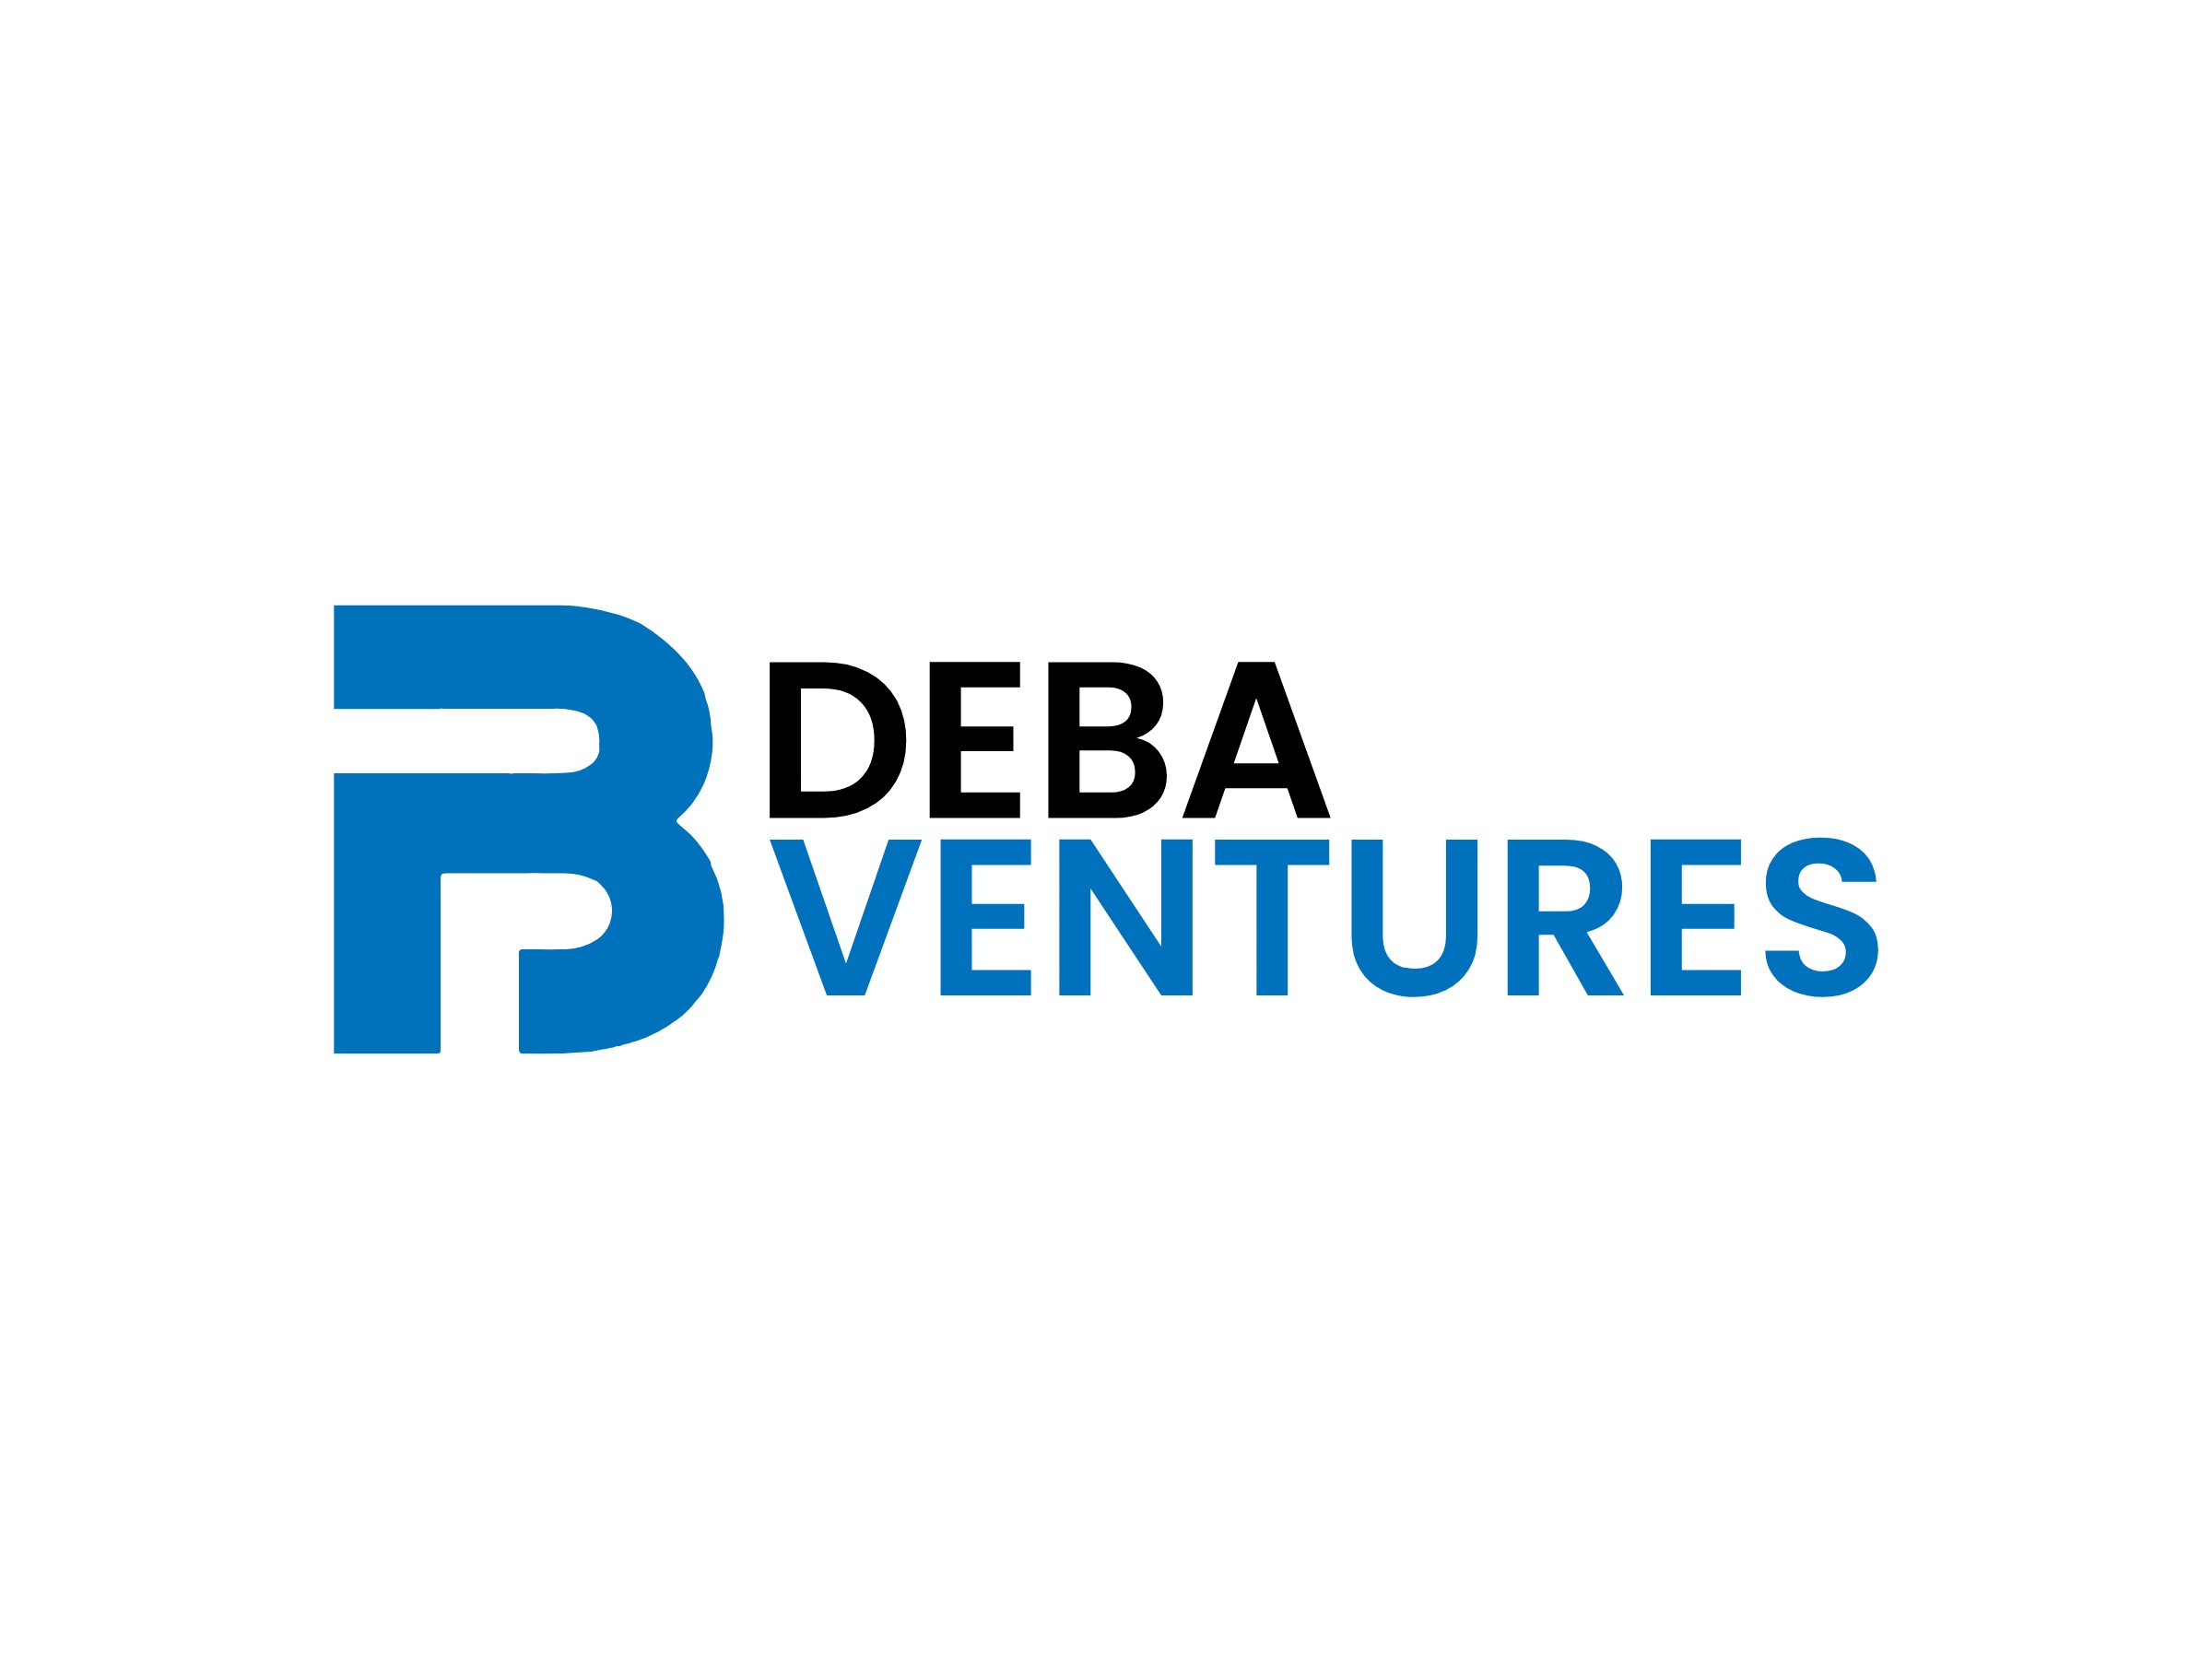 DeBa Ventures